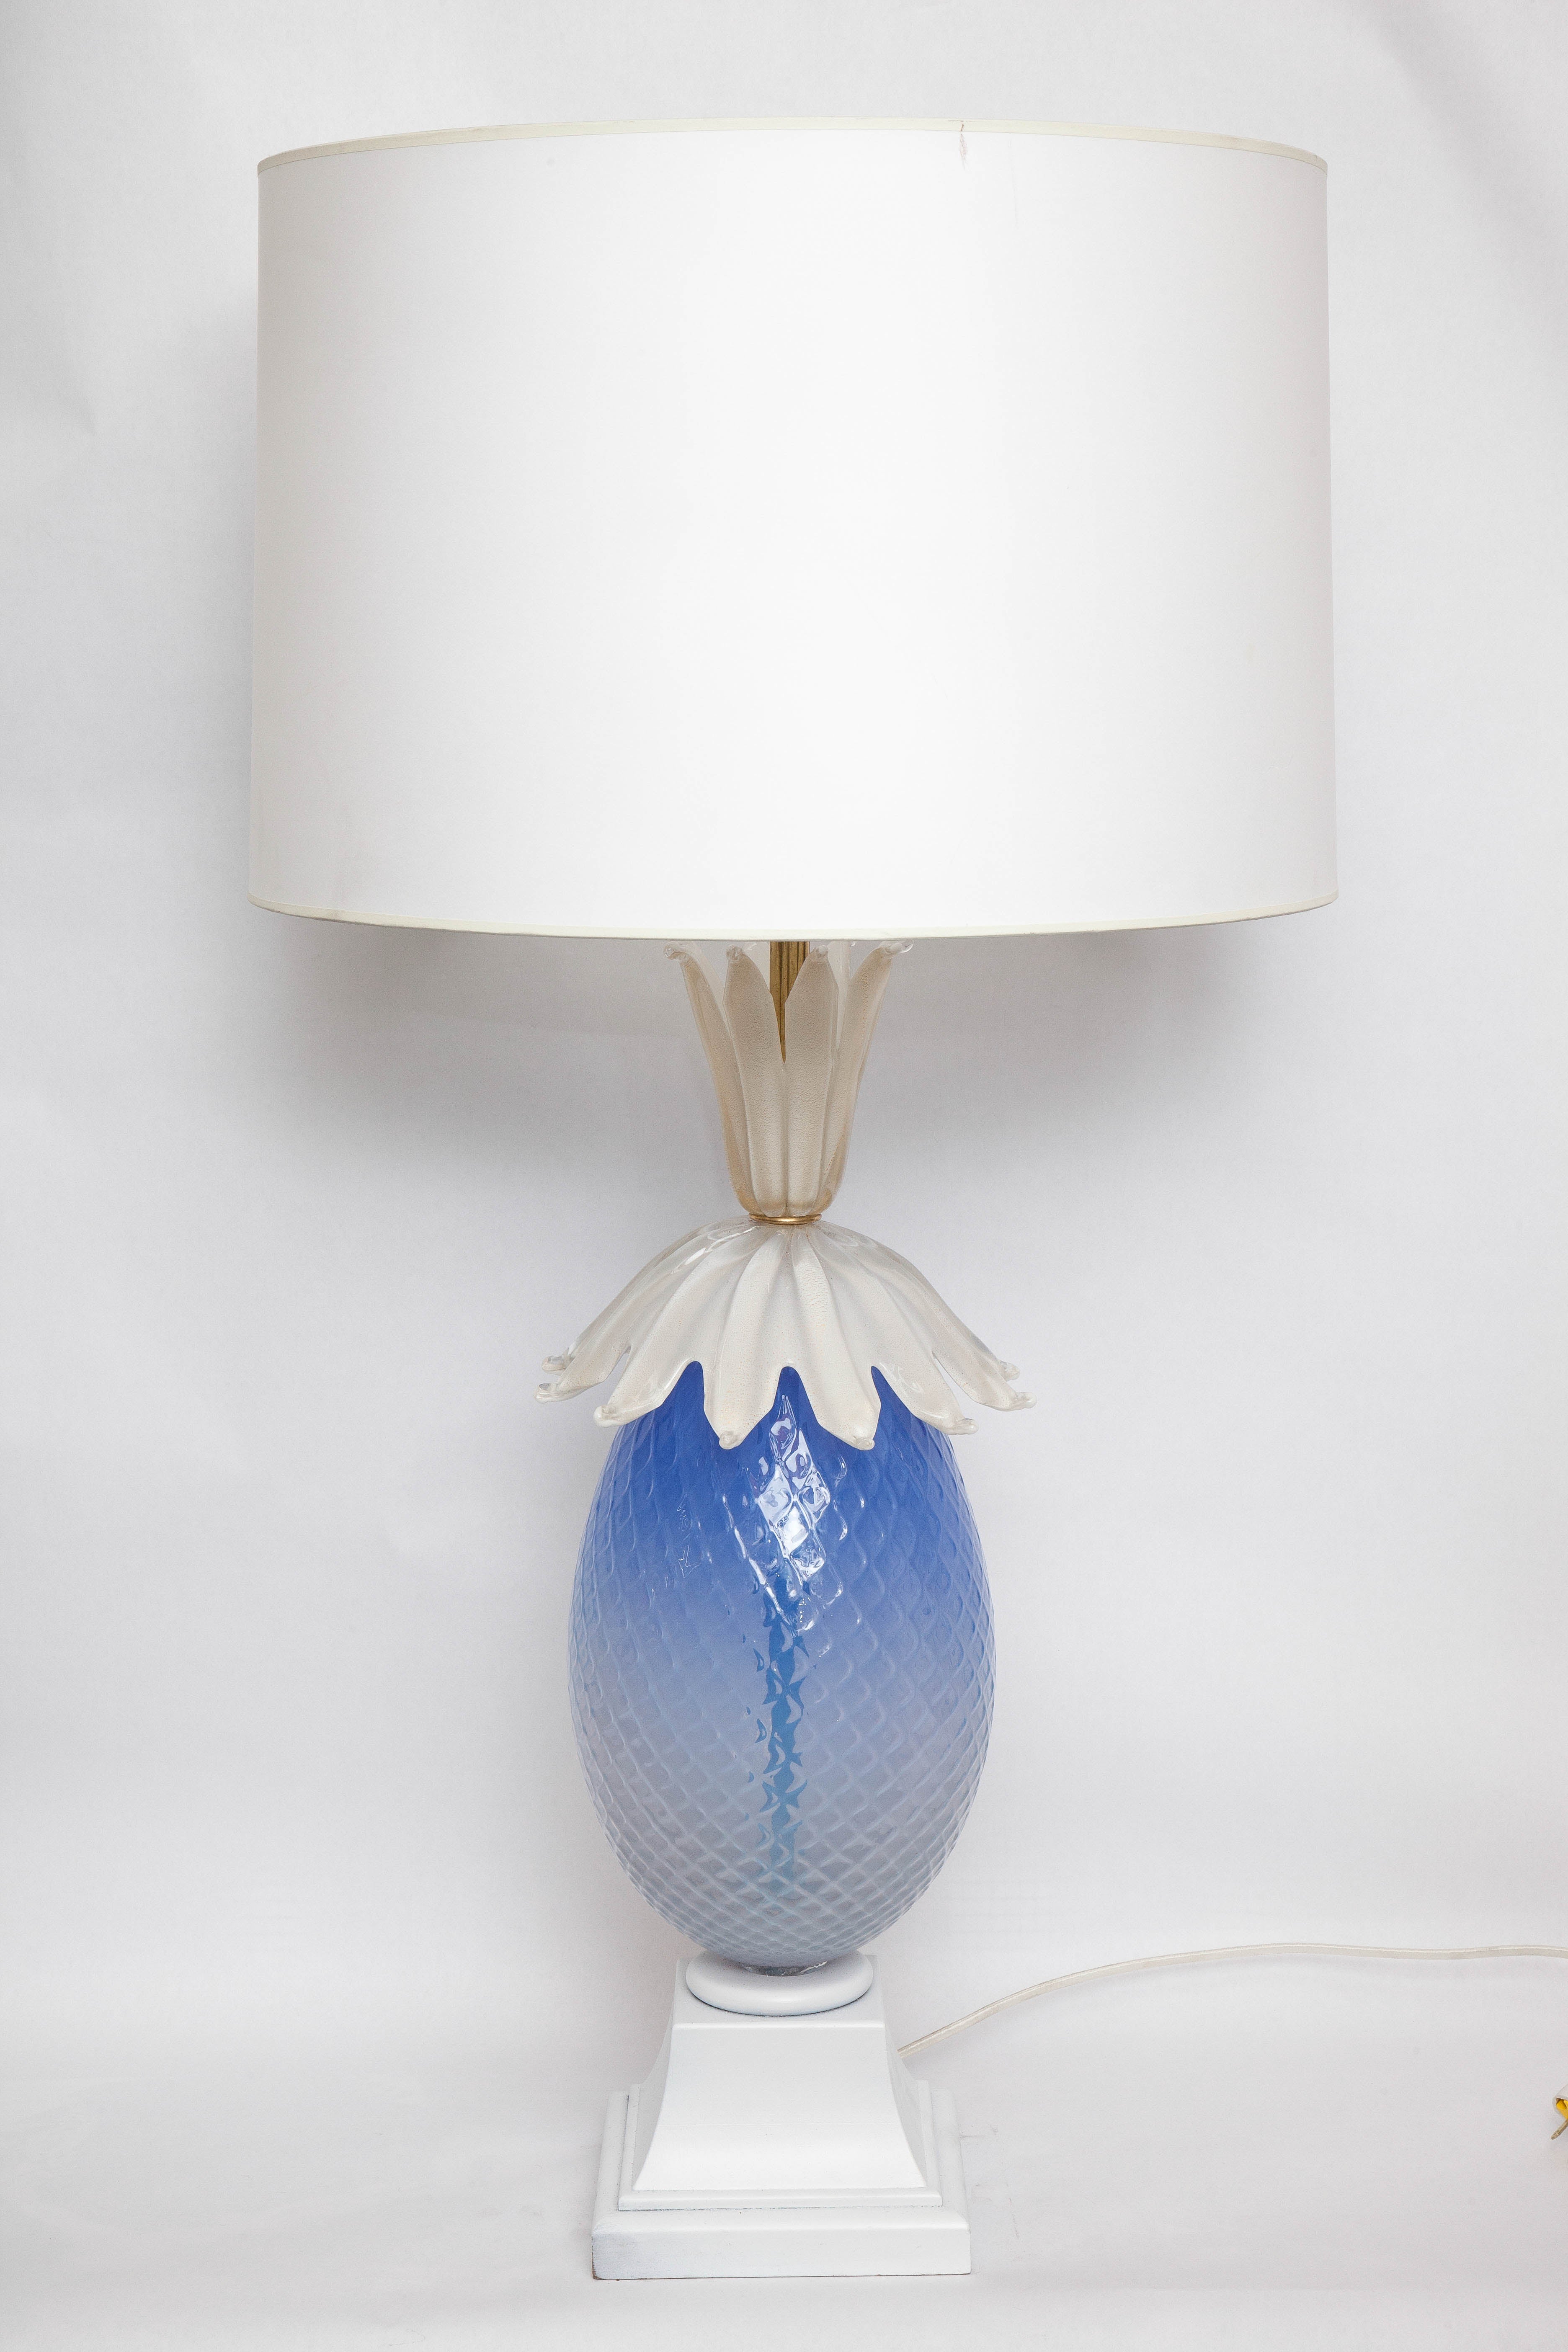  Martenuzzi Table Lamp Murano Glass Mid Century Modern Italy 1950's